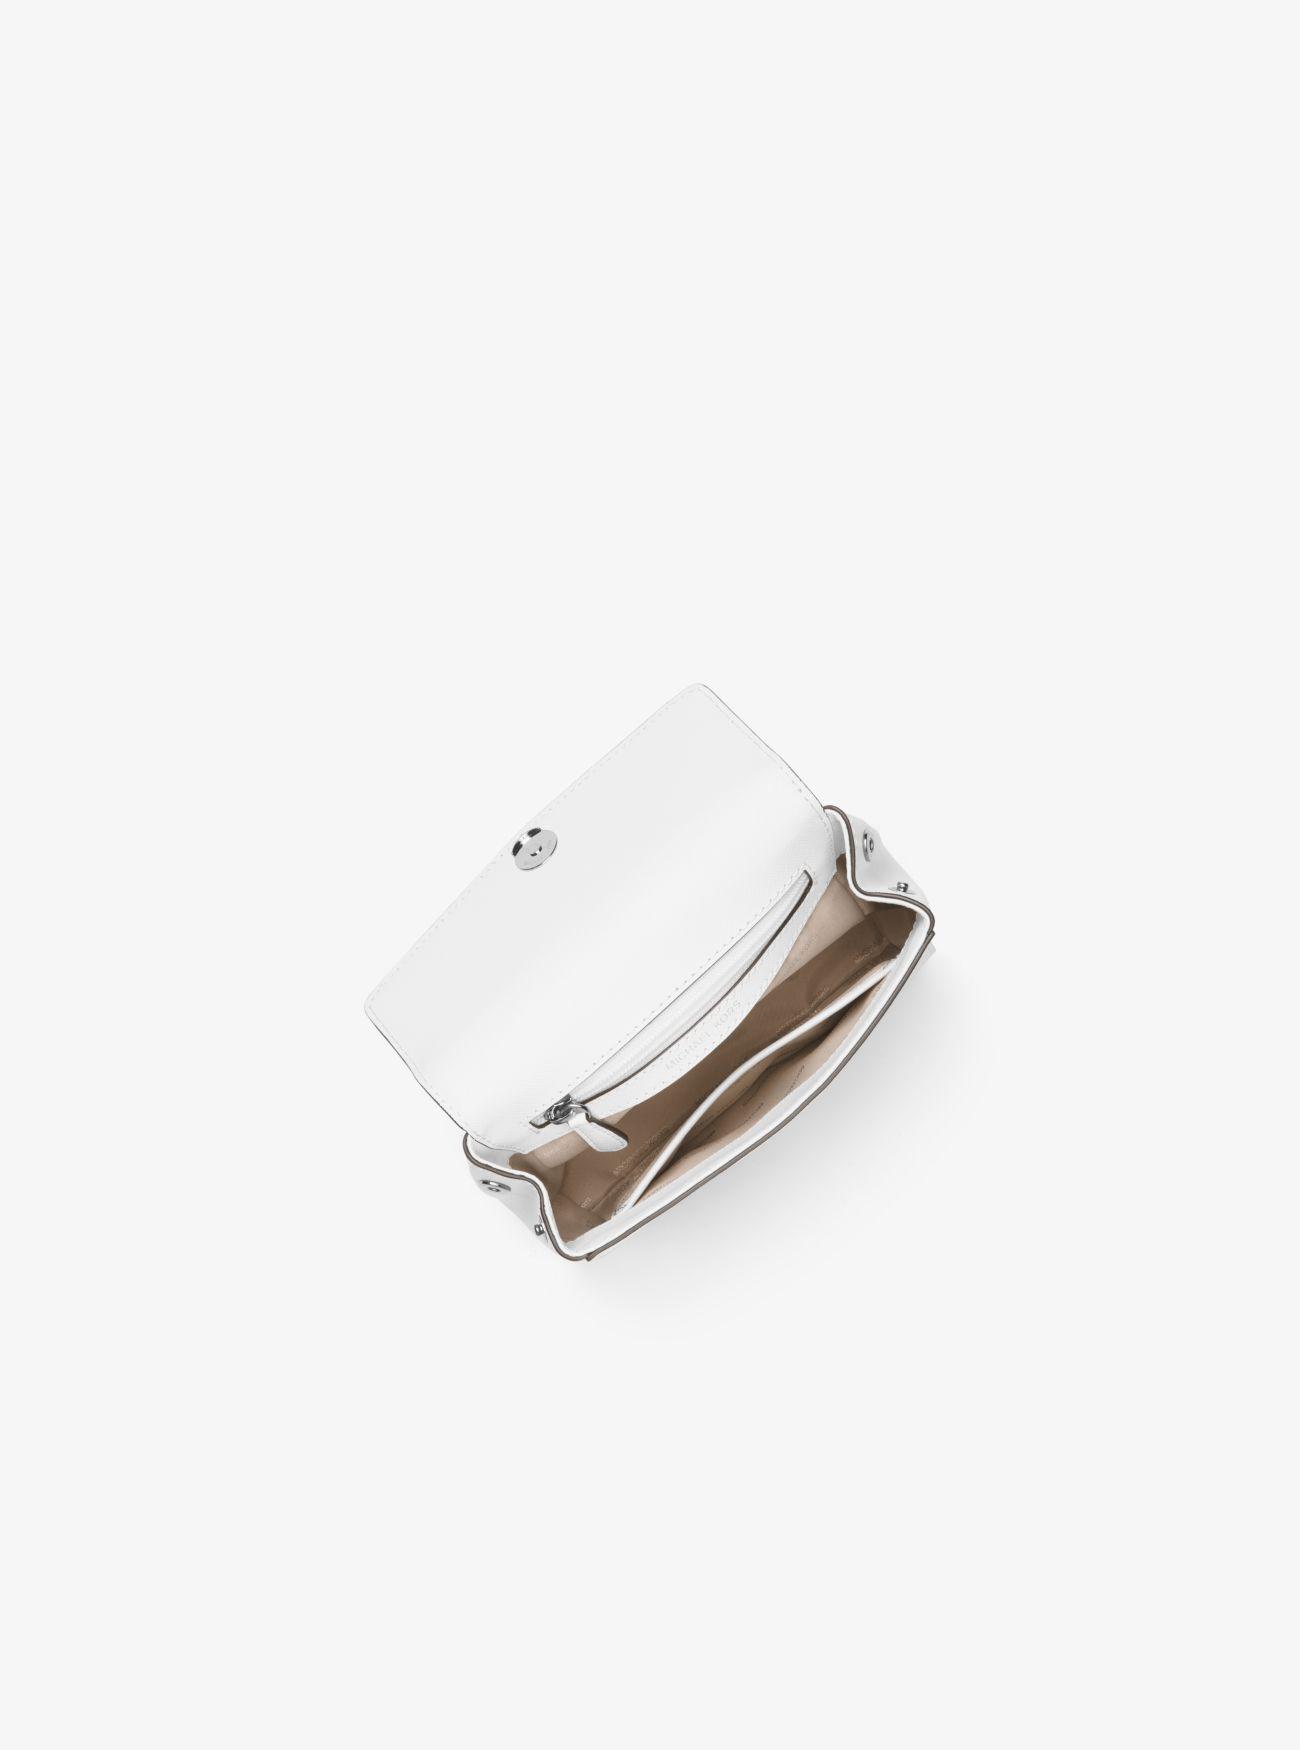 Michael Kors Ava Extra Small Saffiano Leather Crossbody - Optic White (220  BGN) ❤ liked on Polyvore featu…